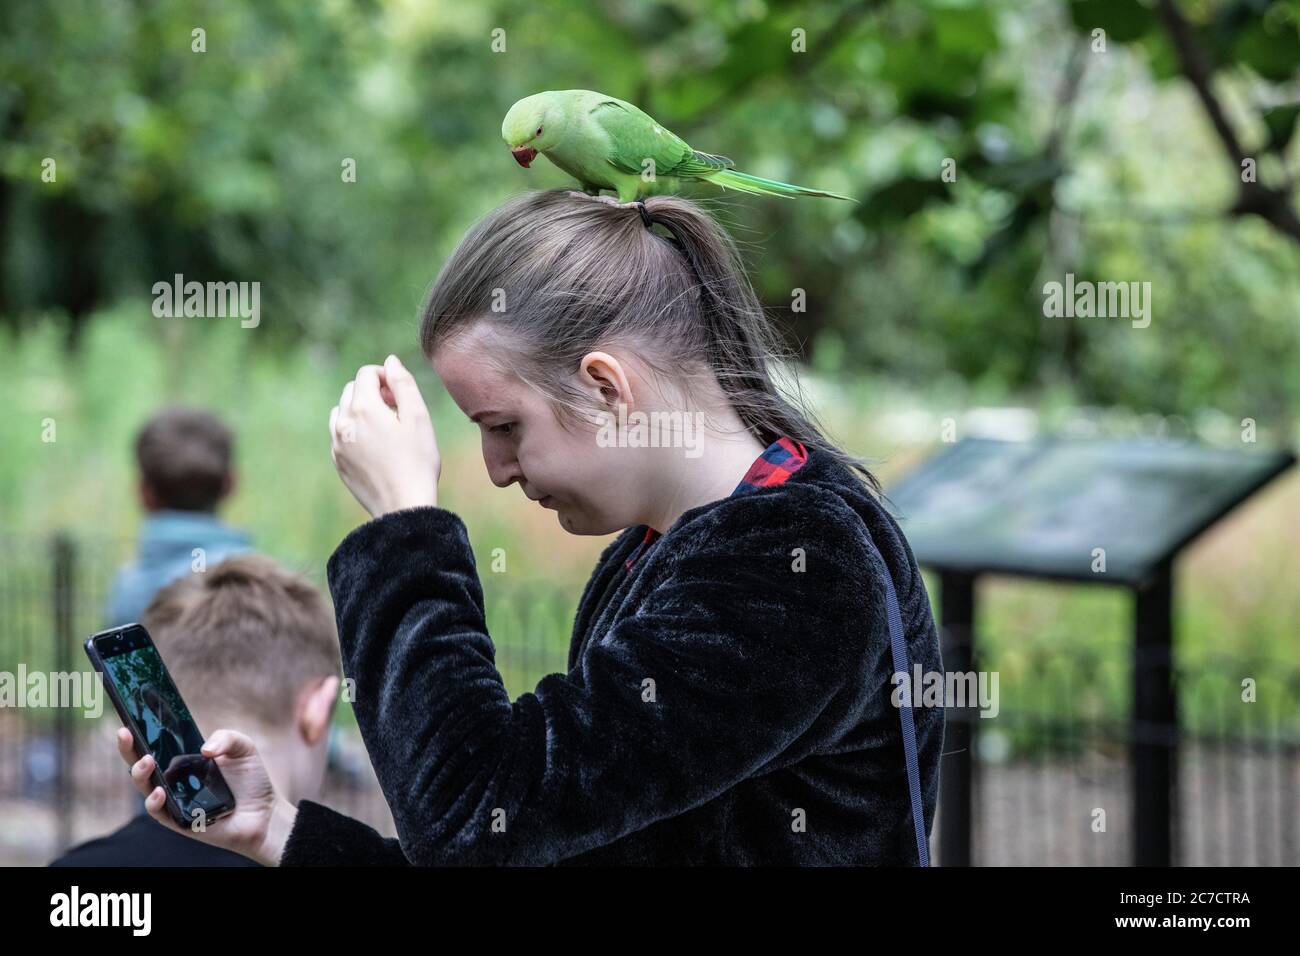 St James's Park, London. 16th July 2020. UK Weather: Parakeets enjoy the return of tourists on a warm but overcast day in St James's Park, London, United Kingdom Credit: Clickpics/Alamy Live News Stock Photo